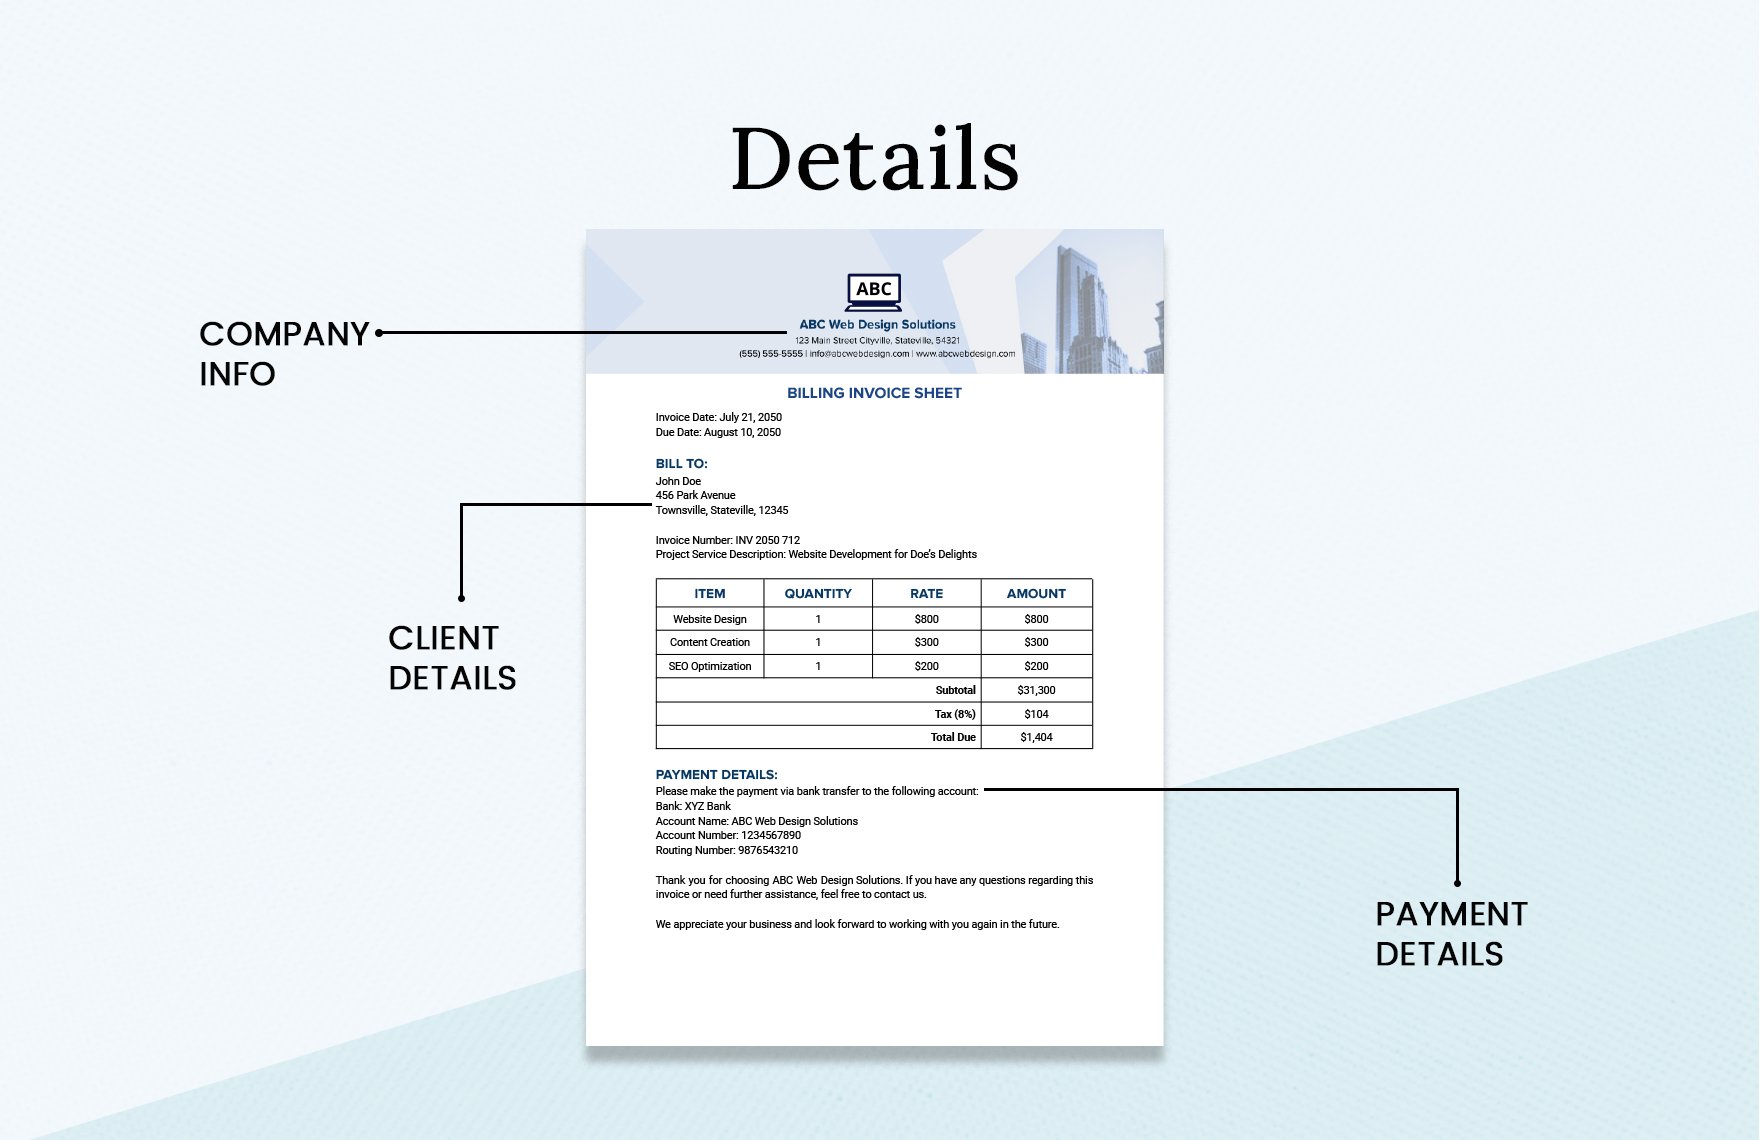 Billing Invoice Sheet